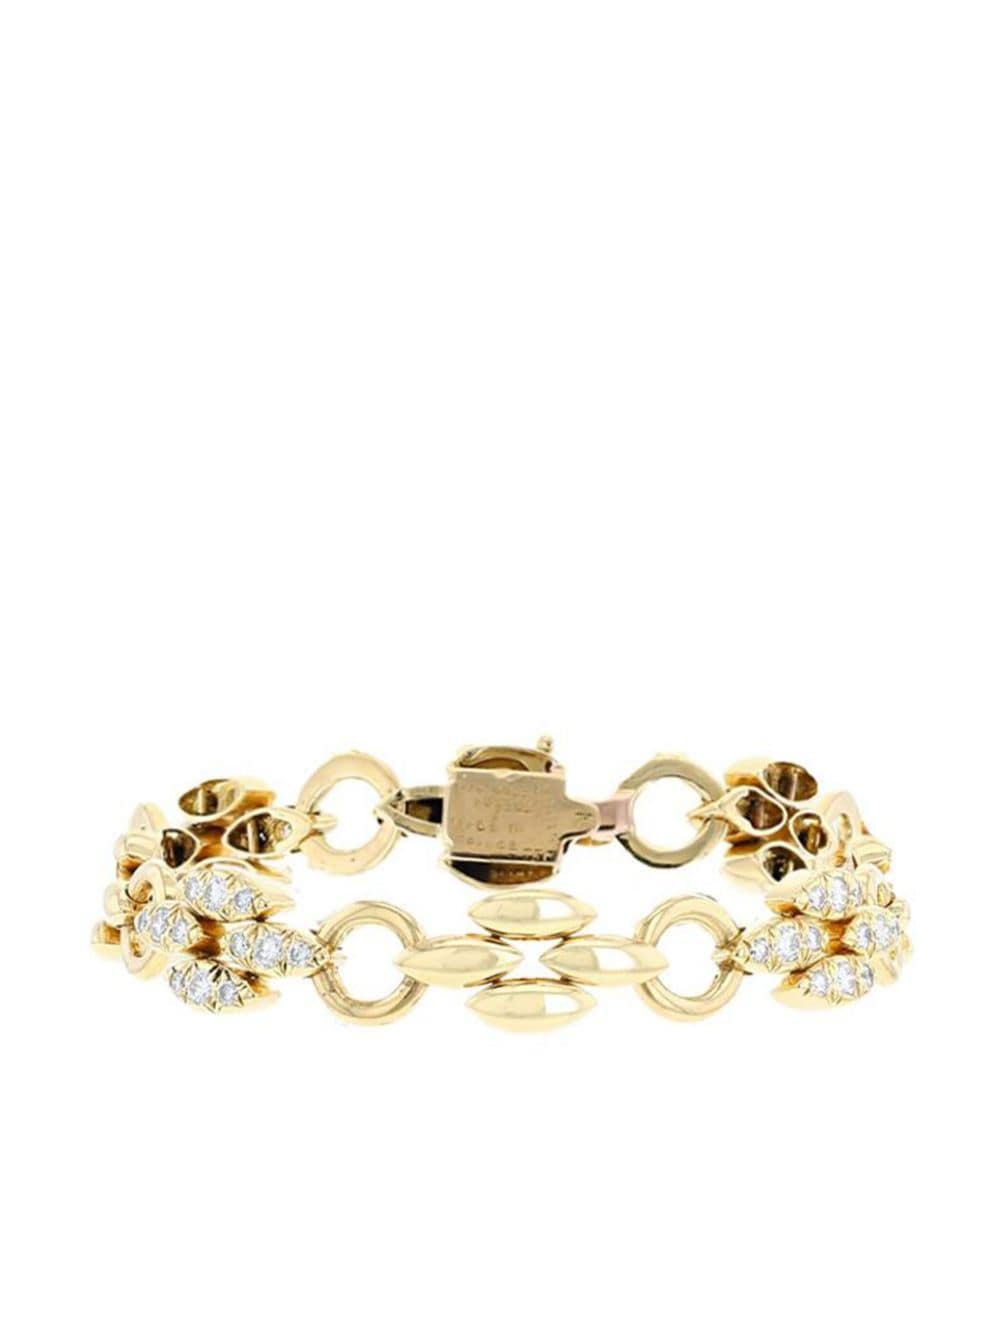 1980s pre-owned 18kt yellow gold diamond bracelet